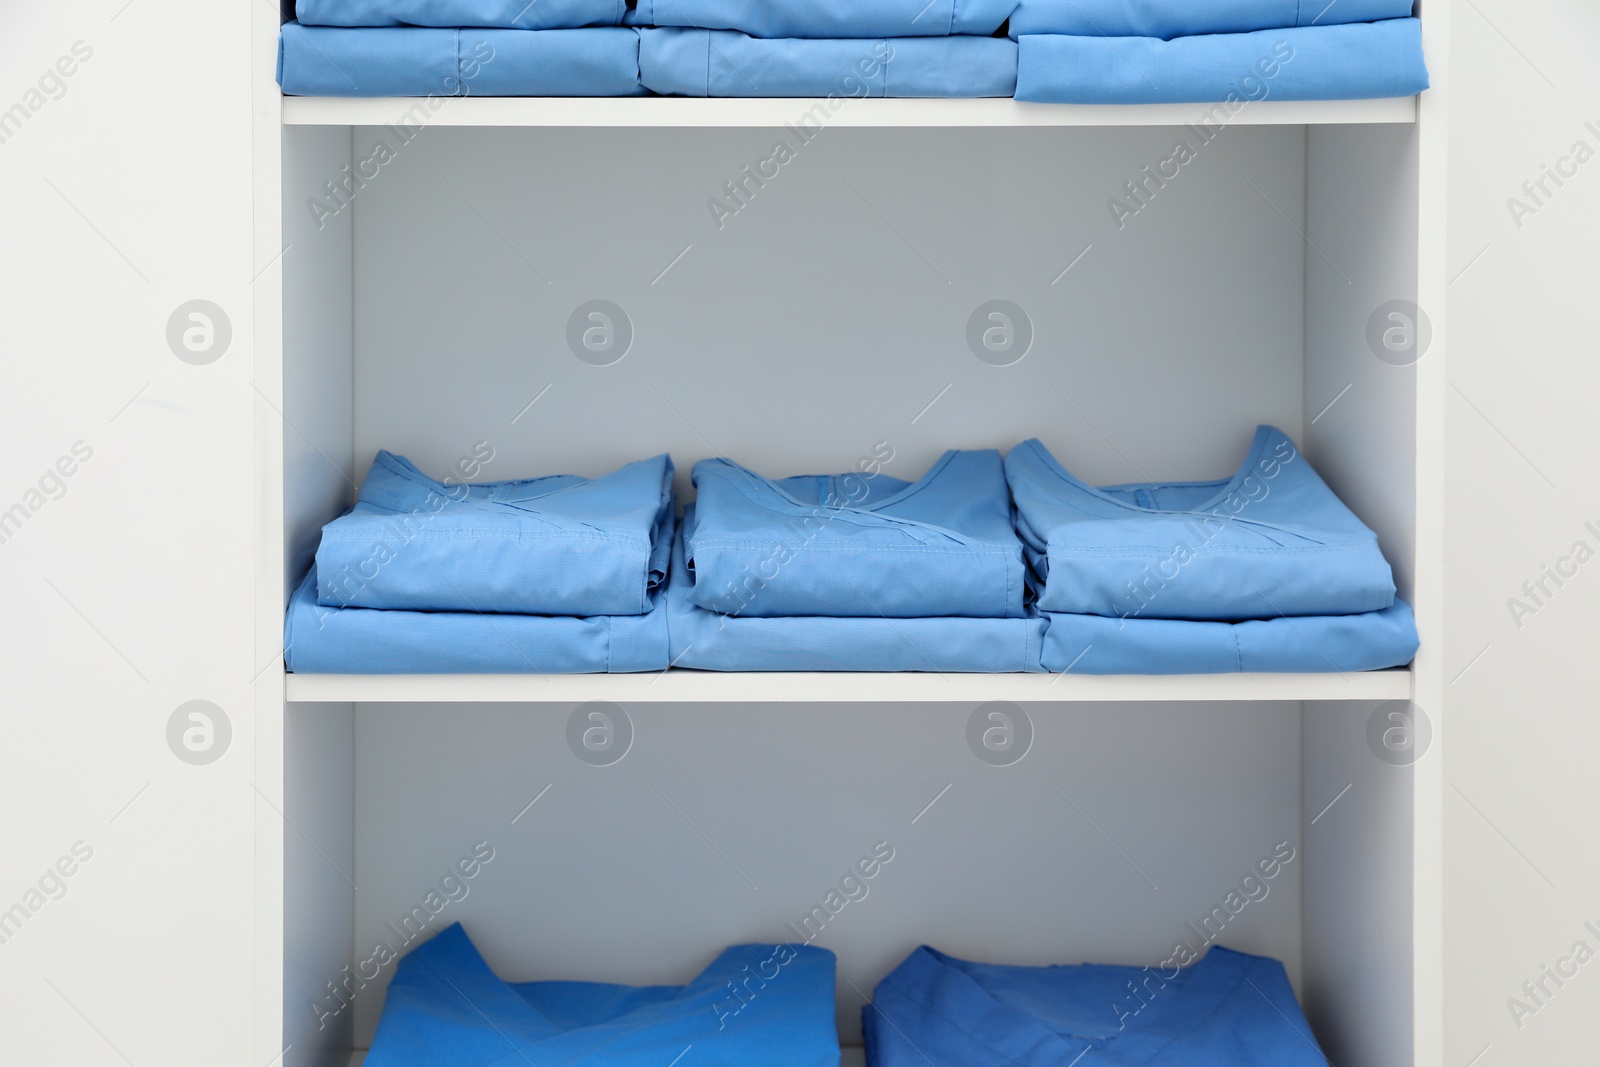 Photo of Light blue medical uniforms on white rack